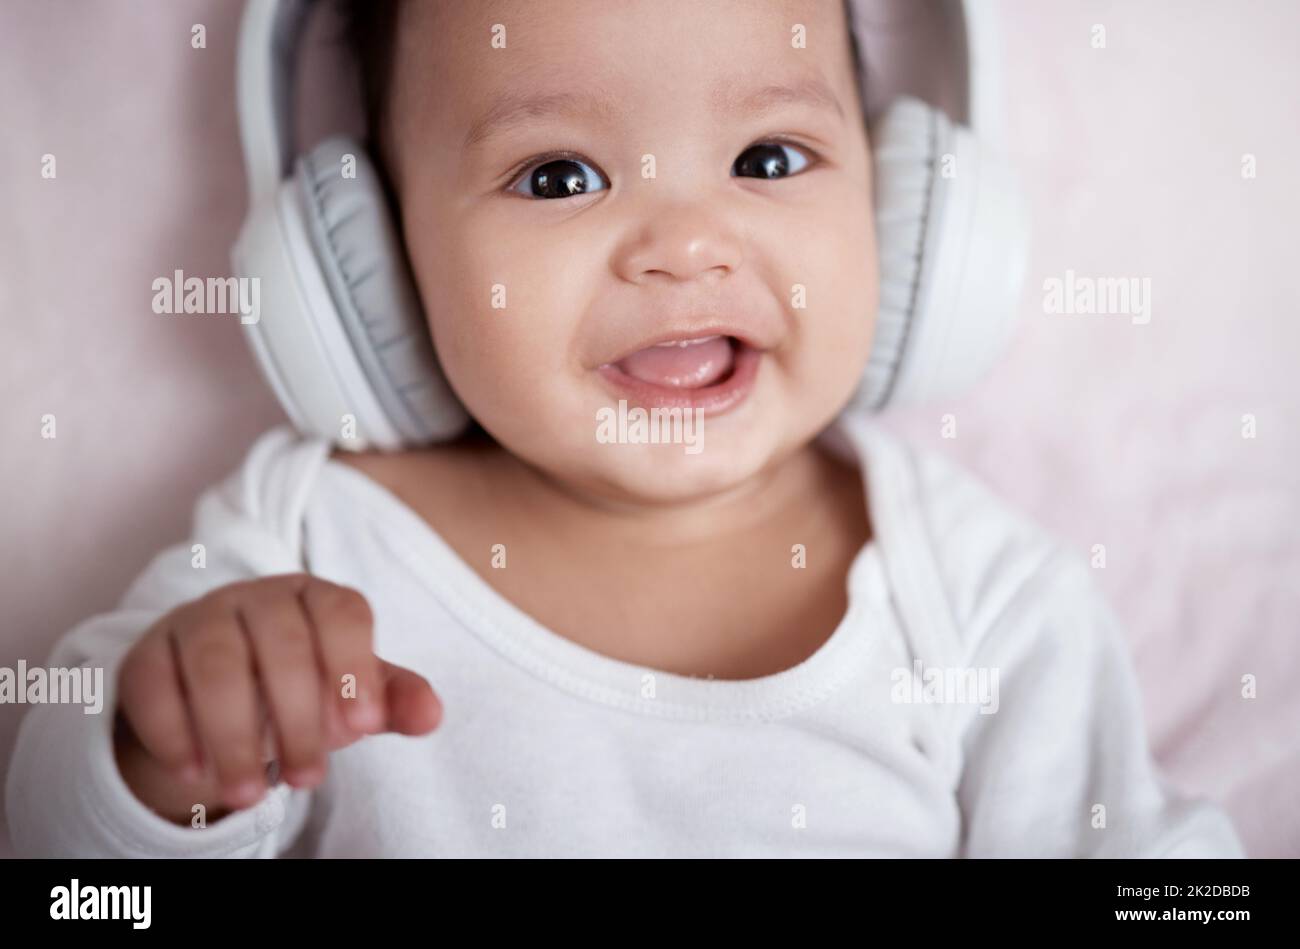 Bebé usando auriculares fotografías e imágenes de alta resolución - Alamy